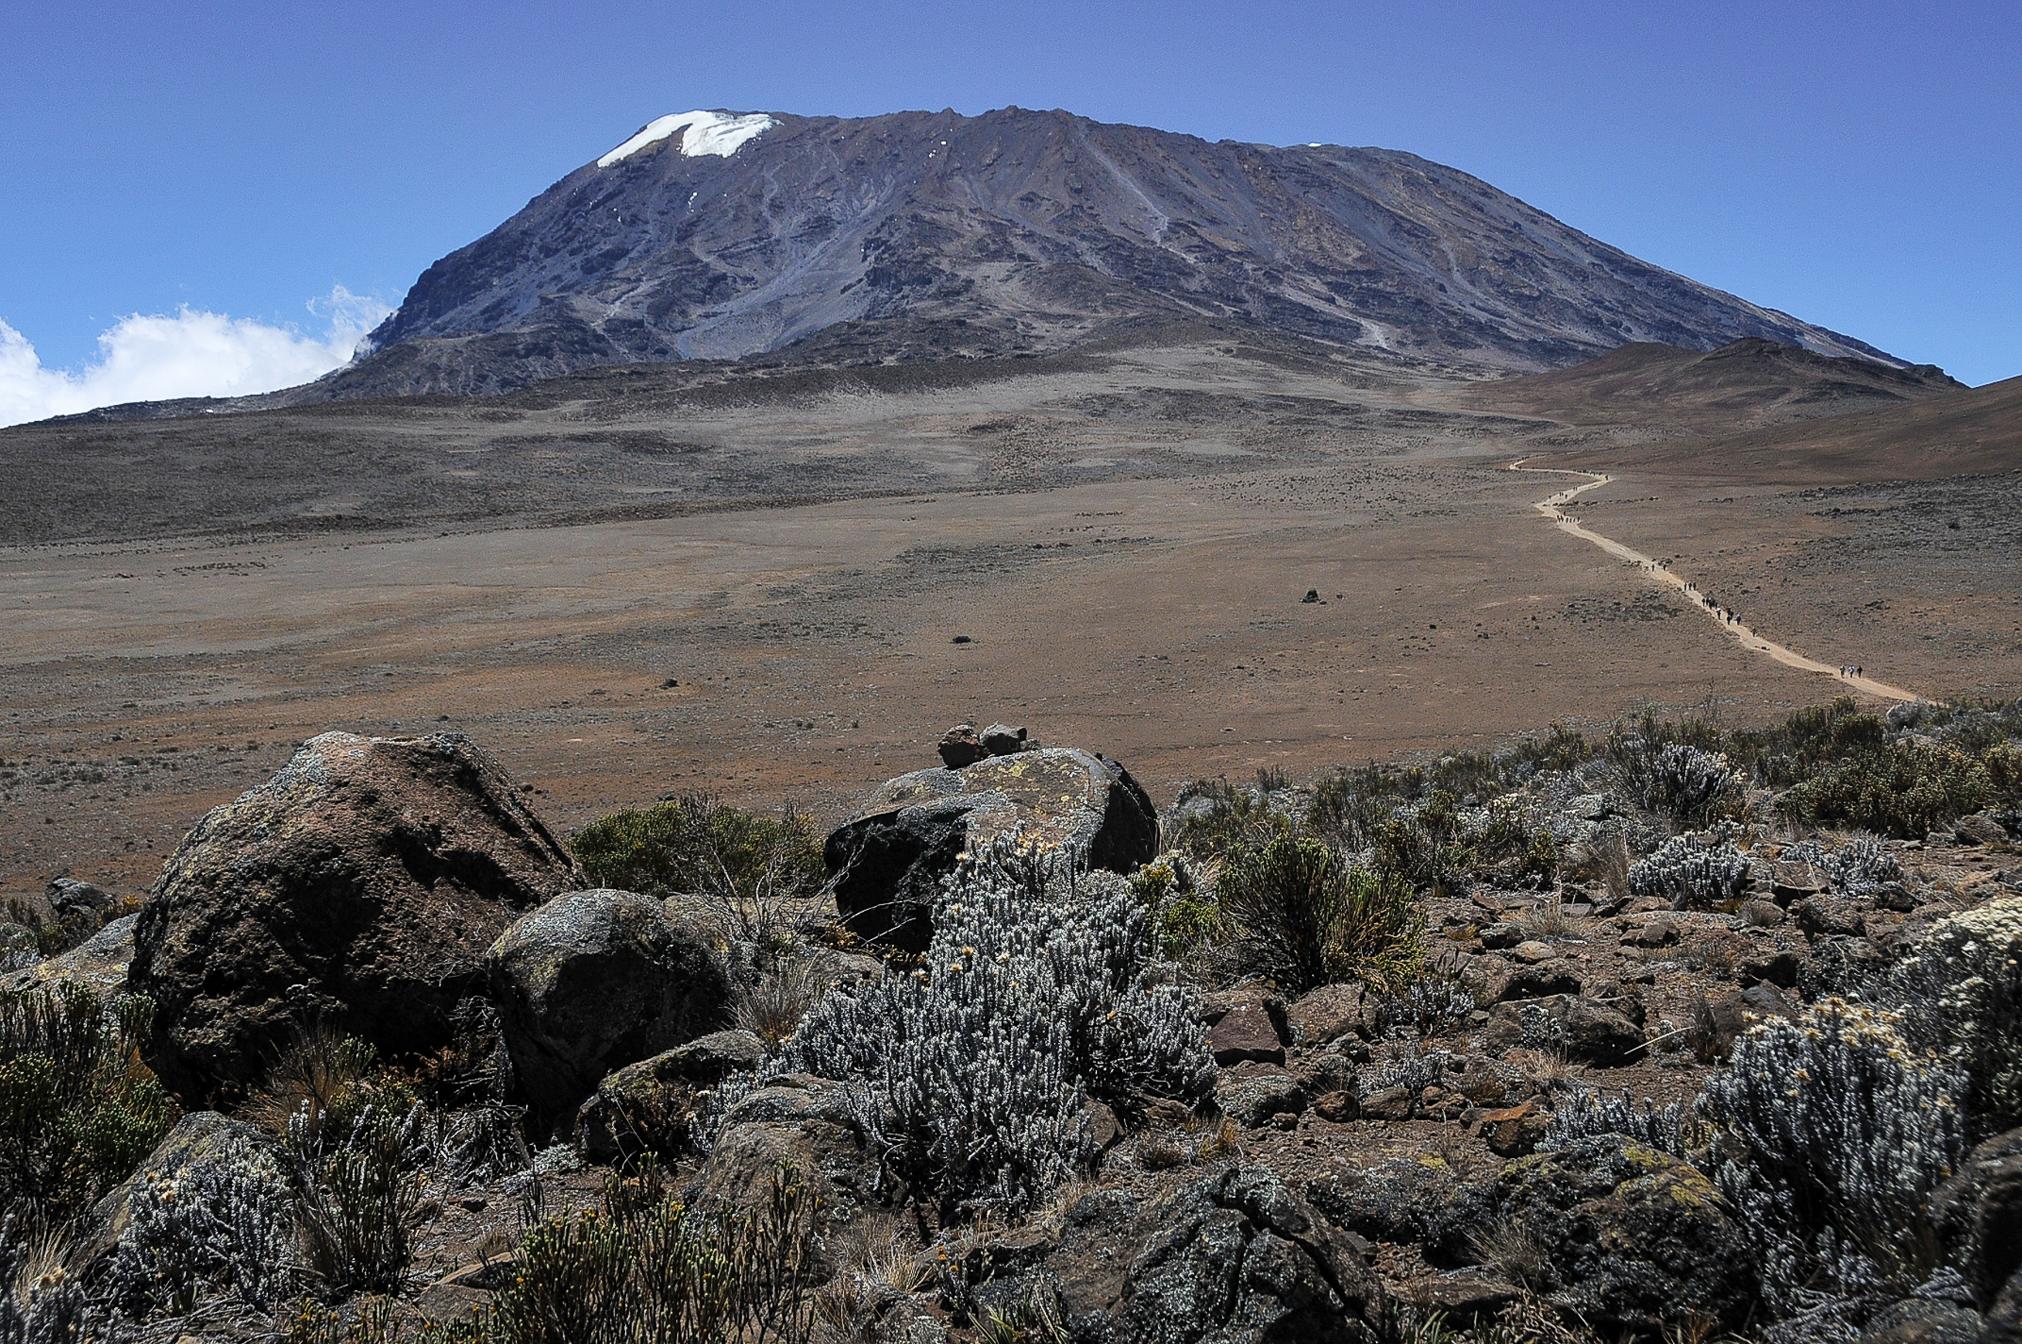 Looking at Kilimanjaro summit from the Marangu Route. Photo: Getty.